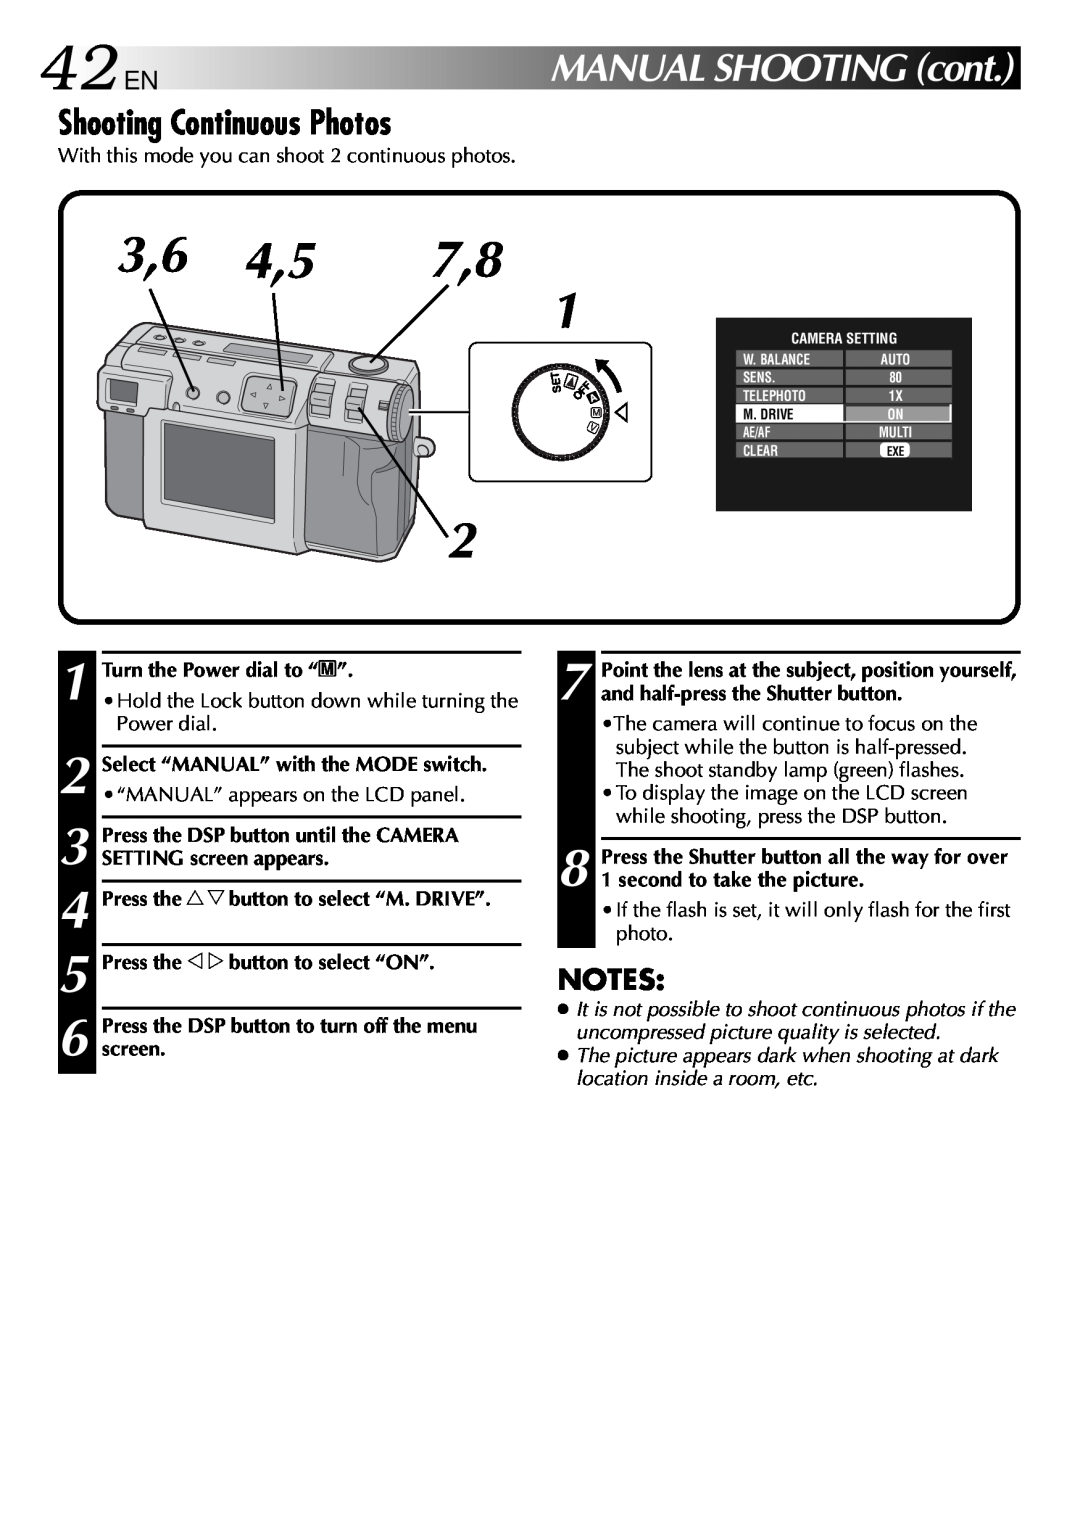 JVC GC-QX3 manual 42EN, 3,6 4,5, Shooting Continuous Photos, MANUALSHOOTINGcont, Press the r t button to select “M. DRIVE” 